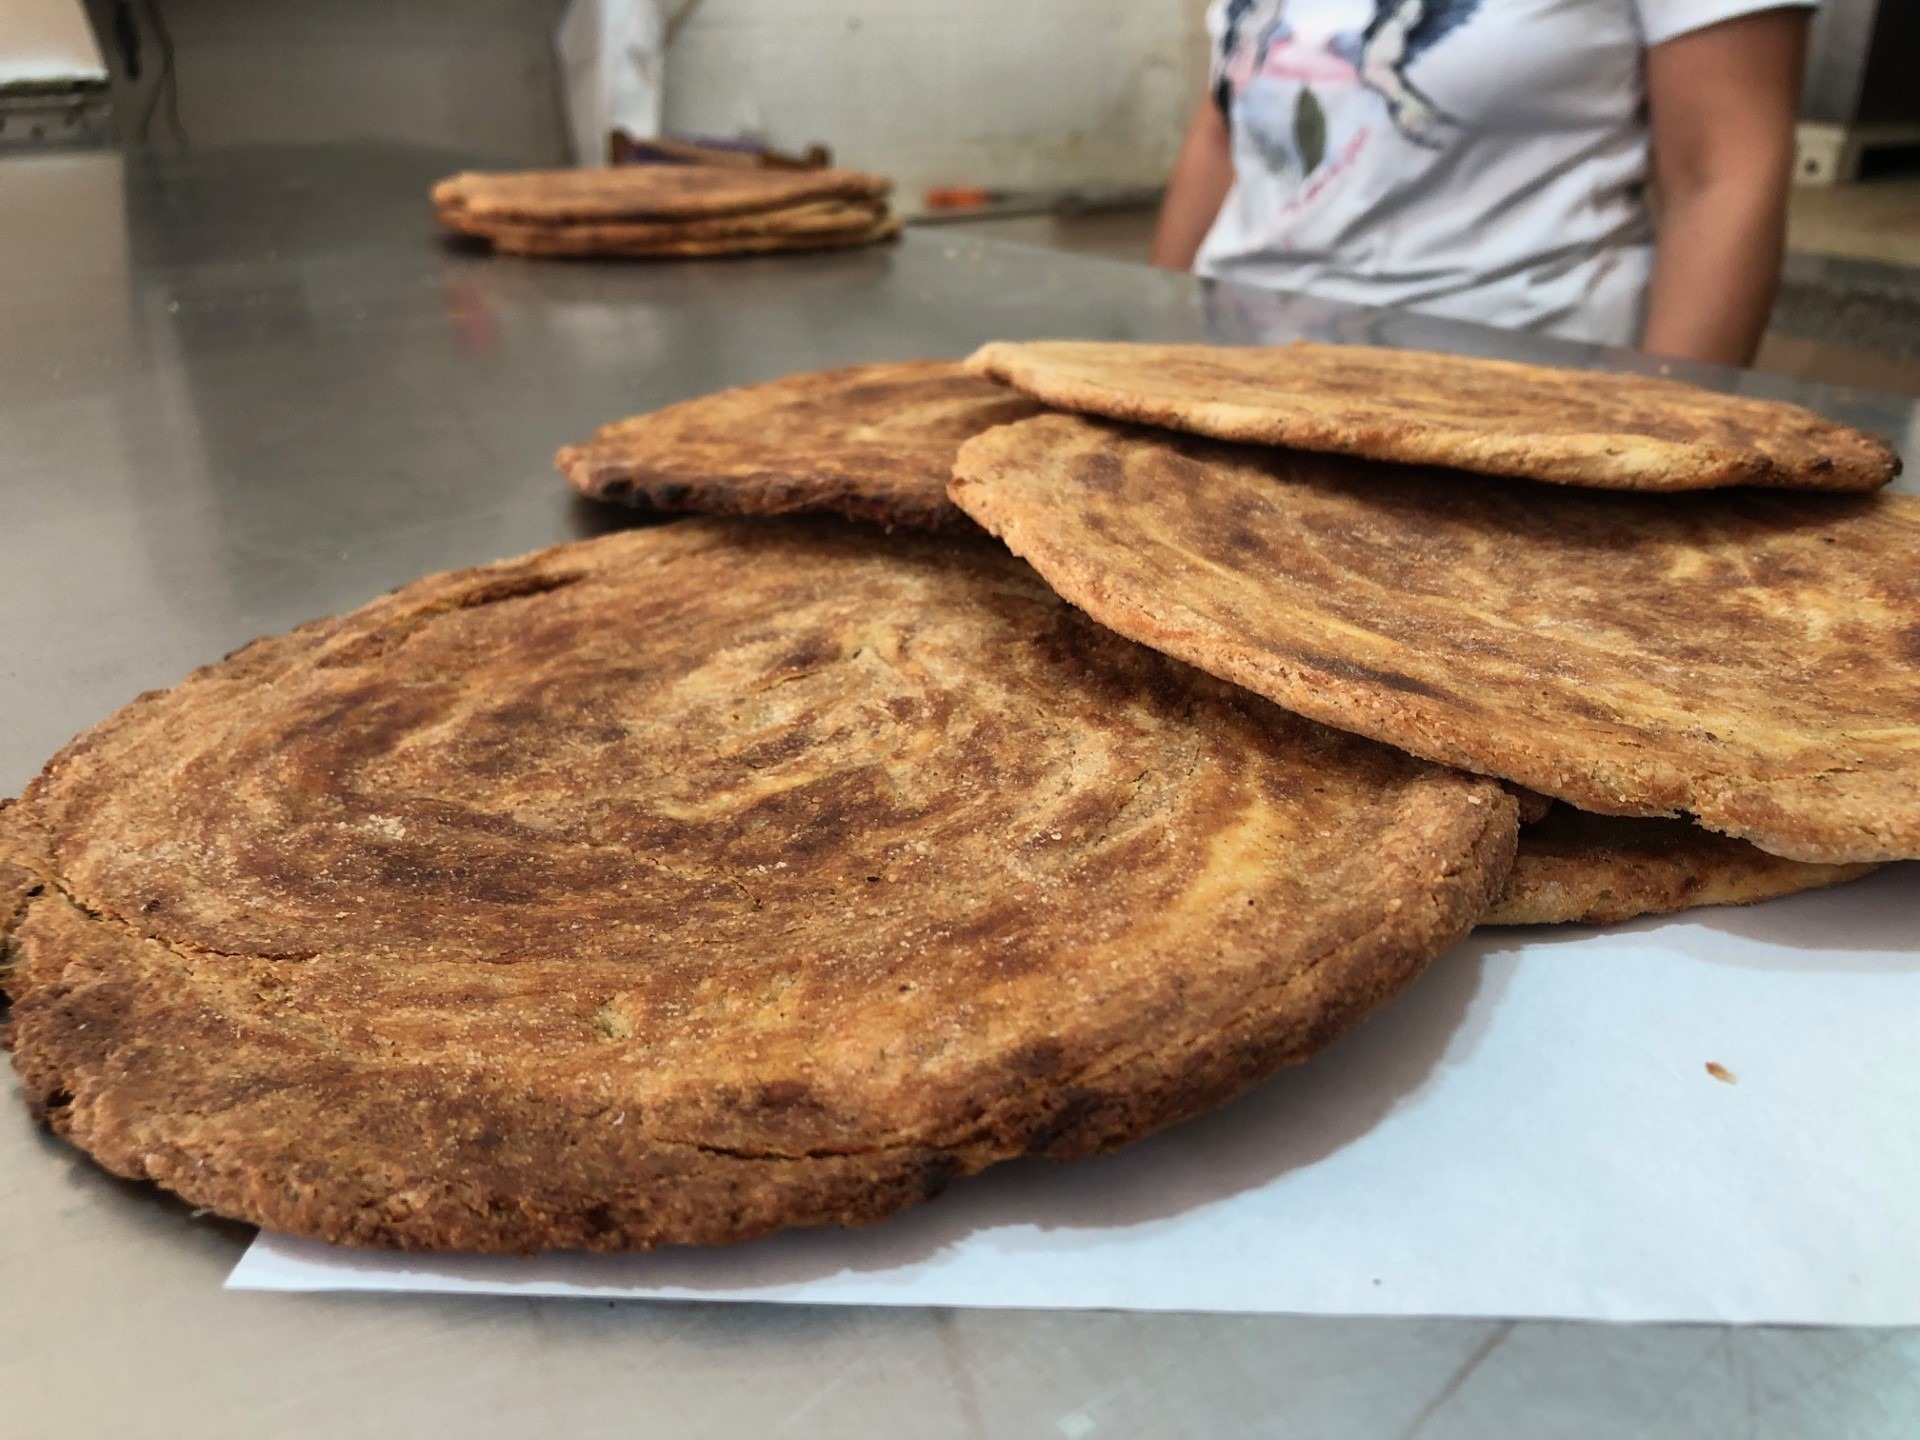 Karnig-Bakery-armenian-food-bourj-hammoud-lebanon-traveler-tourism